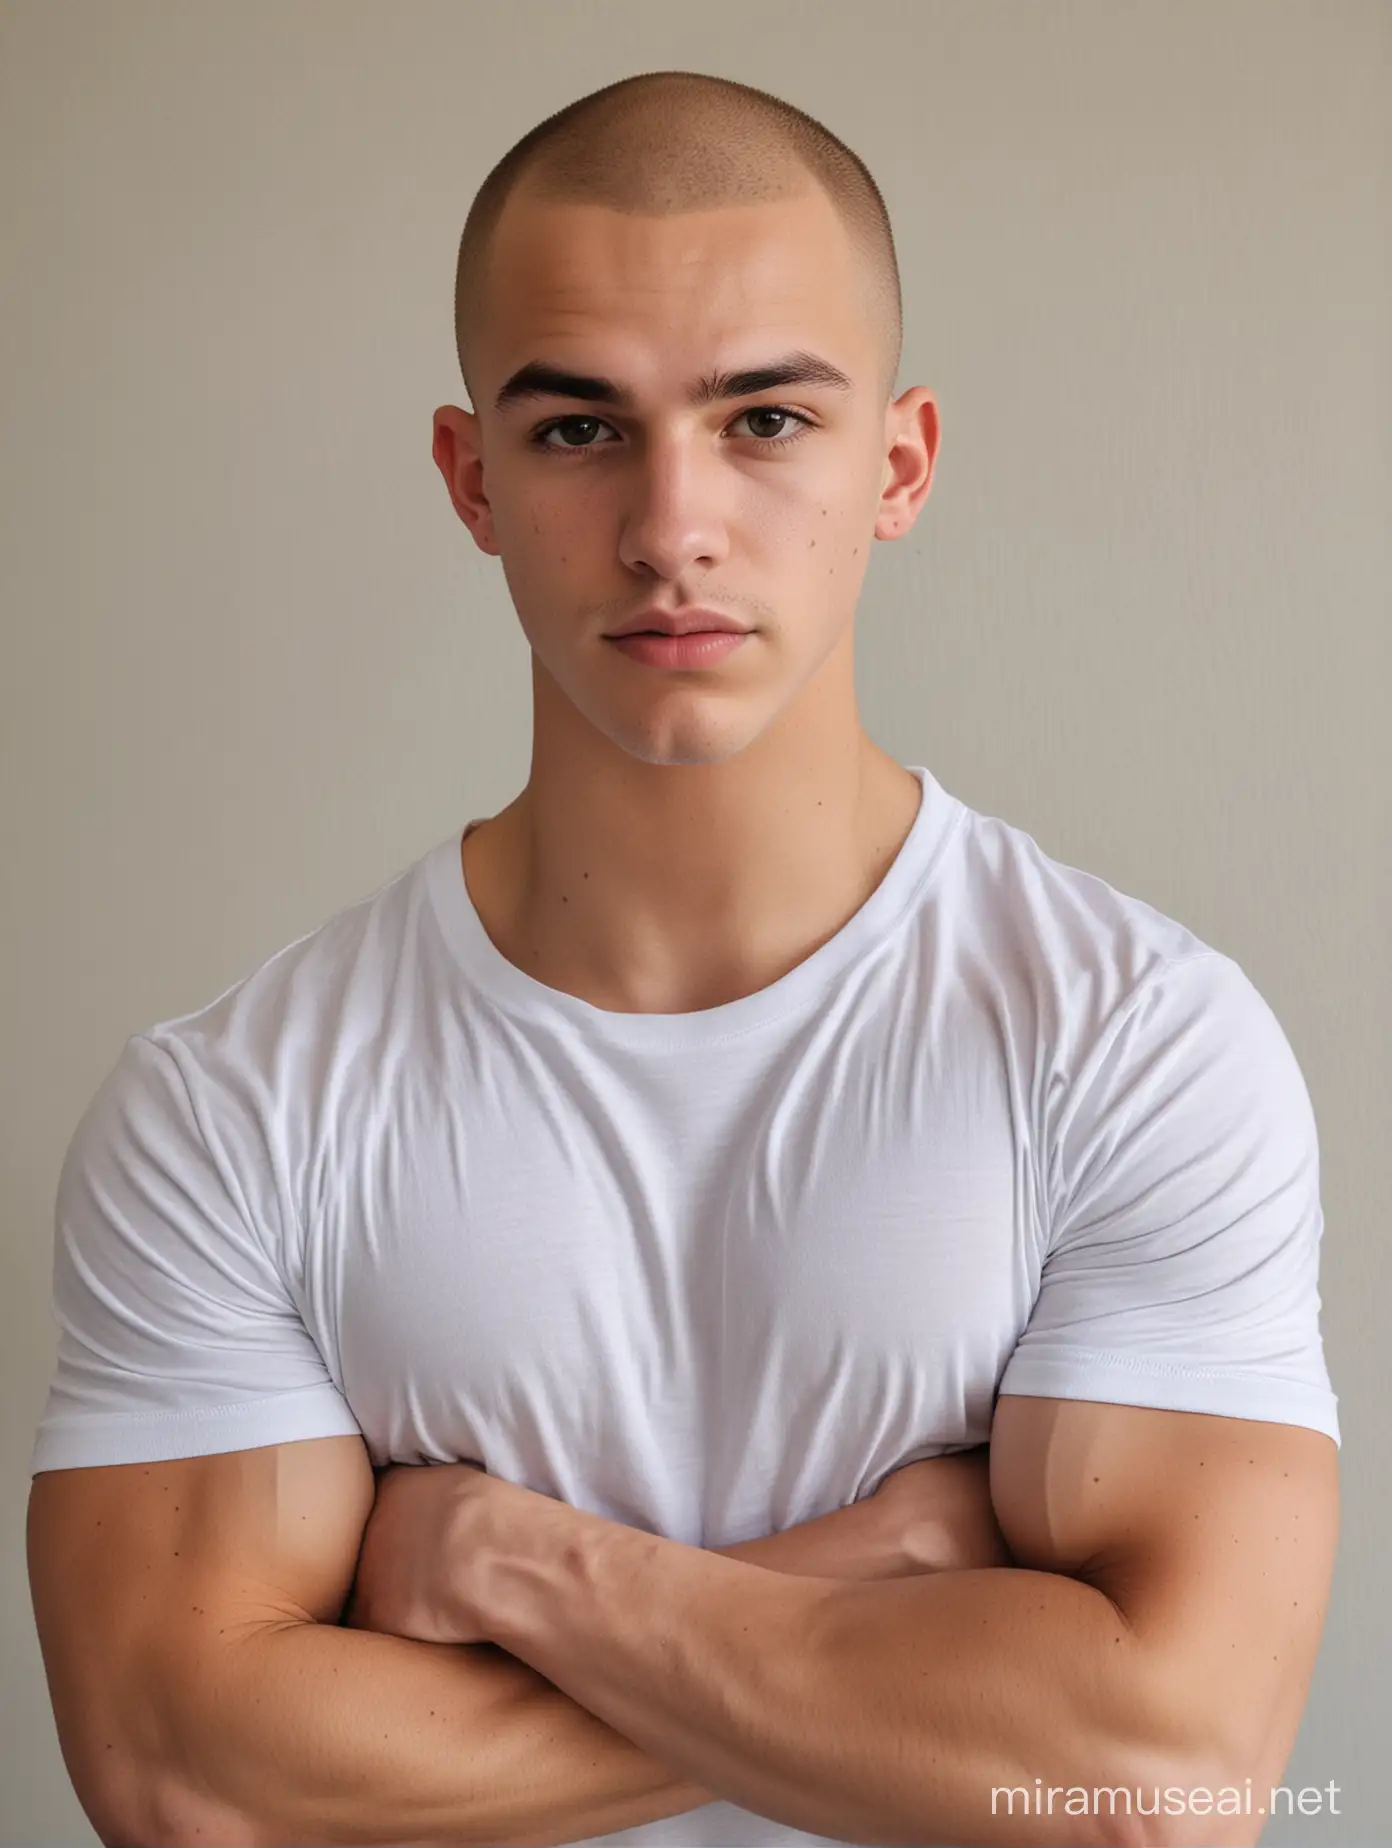 16 years old boy, dark eyes, big biceps,  muscular body, bald, common acne, pocmakrs, valleculae, white t-shirt